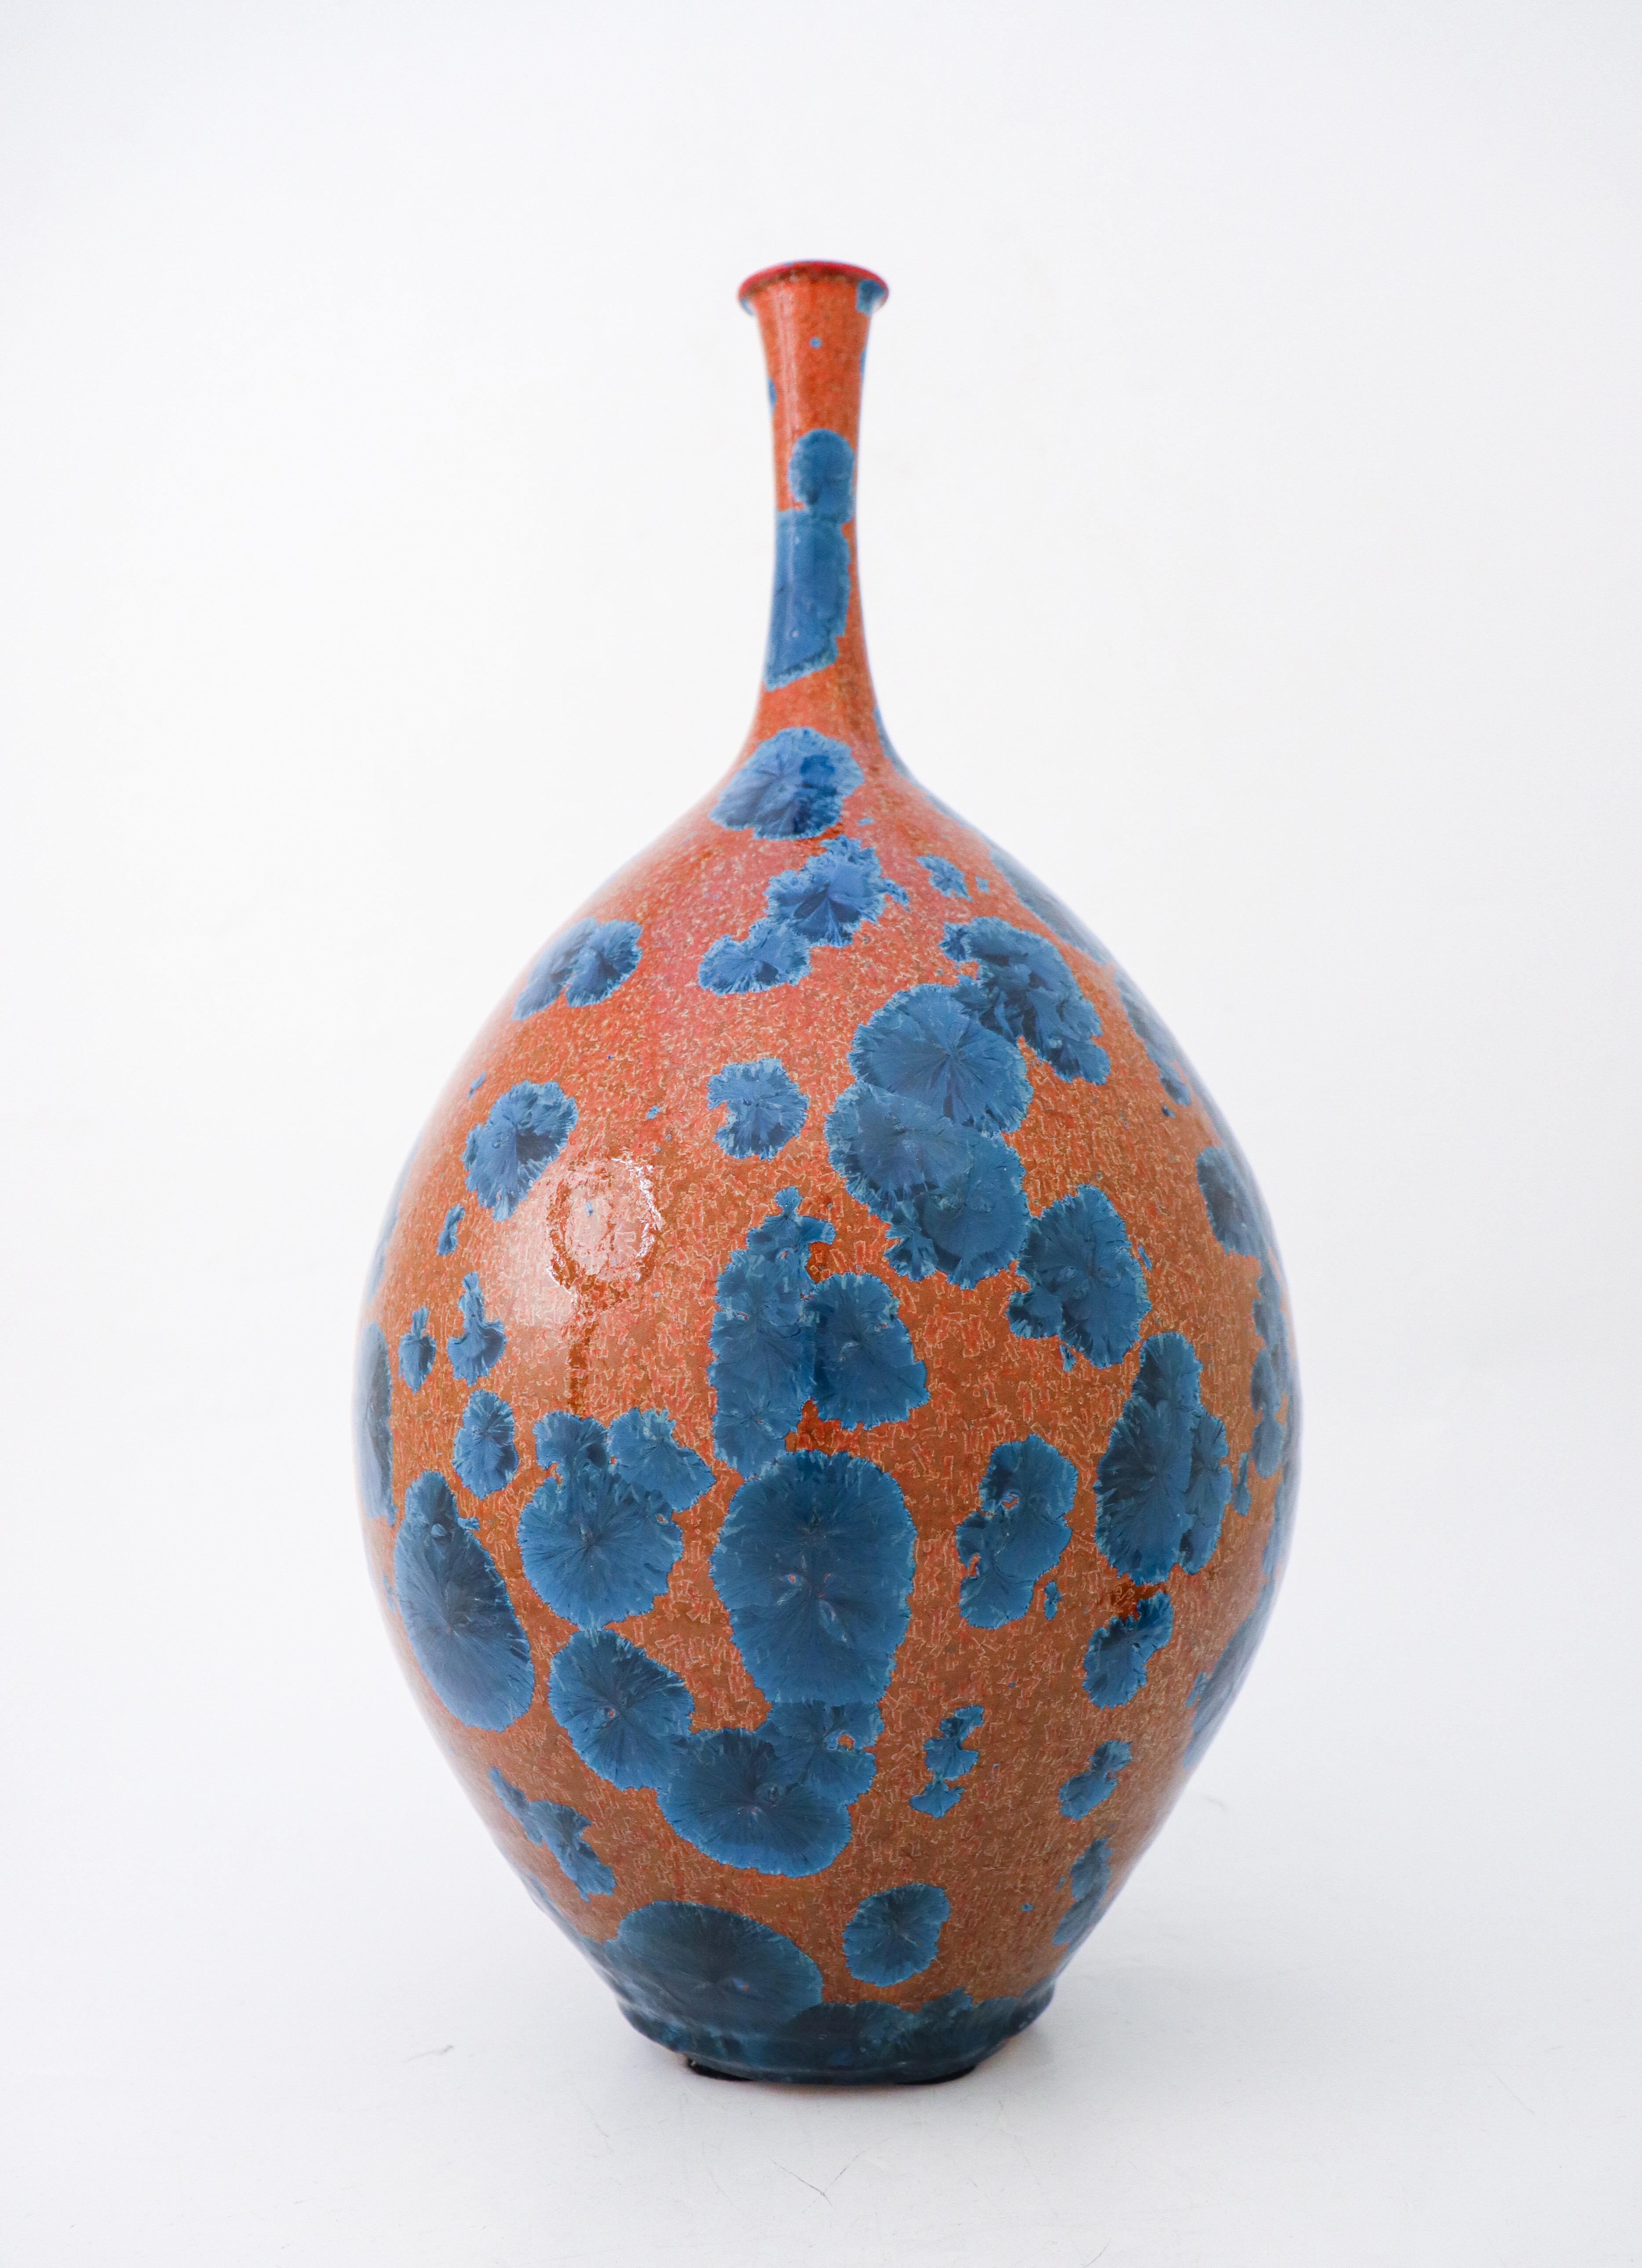 Vase Red & Blue Crystalline Glaze Isak Isaksson Contemporary Sweden Ceramic In New Condition For Sale In Stockholm, SE